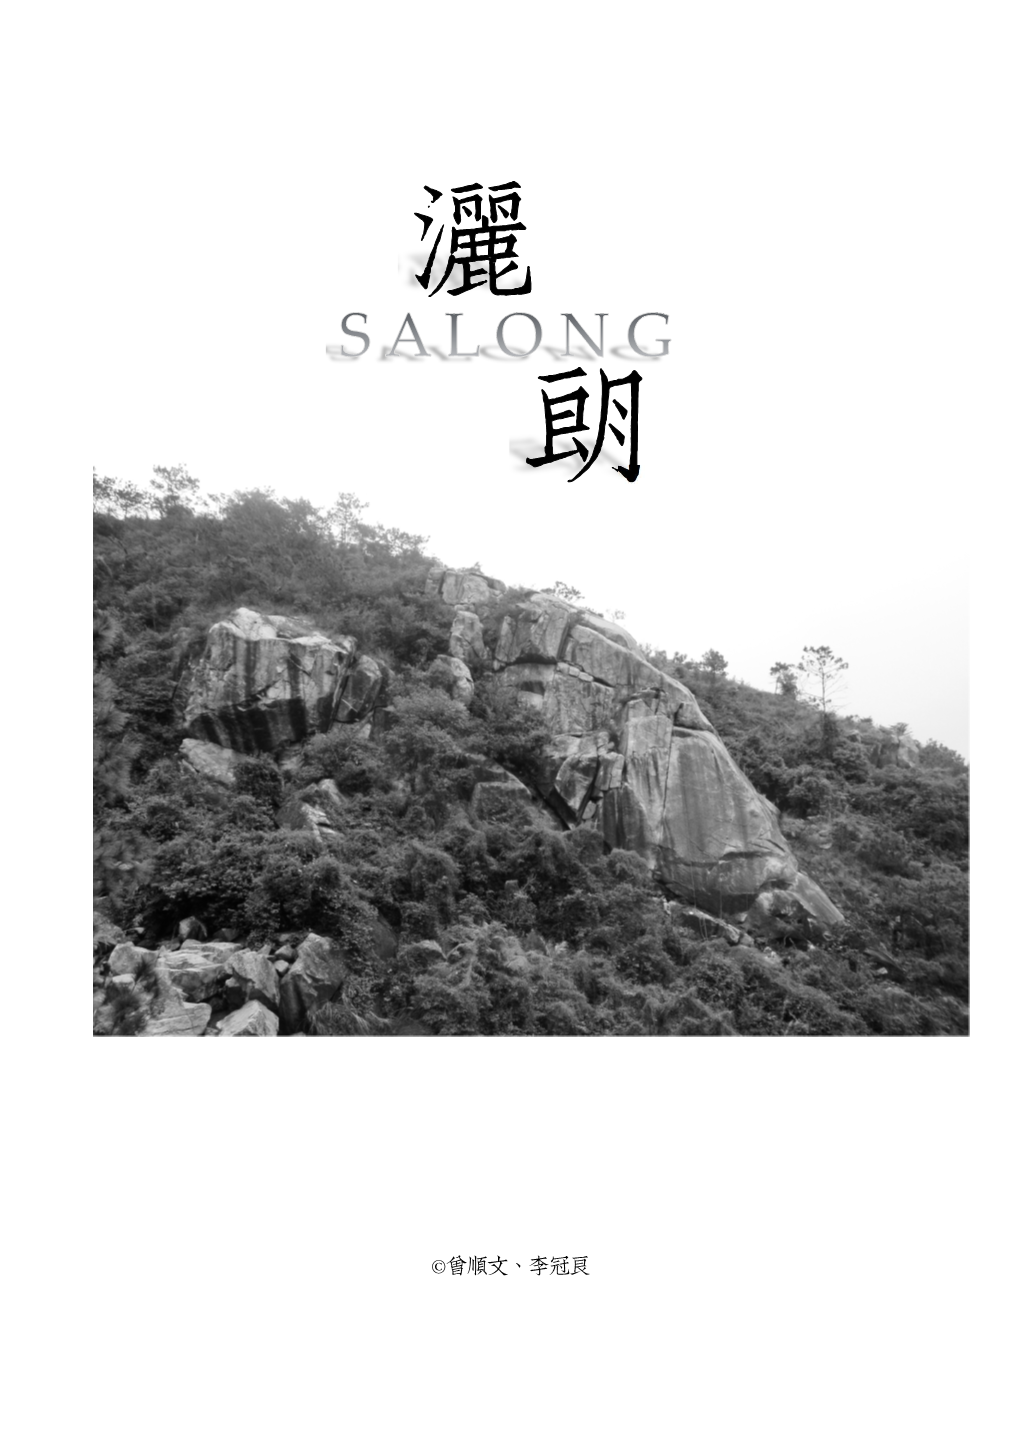 Salong Crag Guide